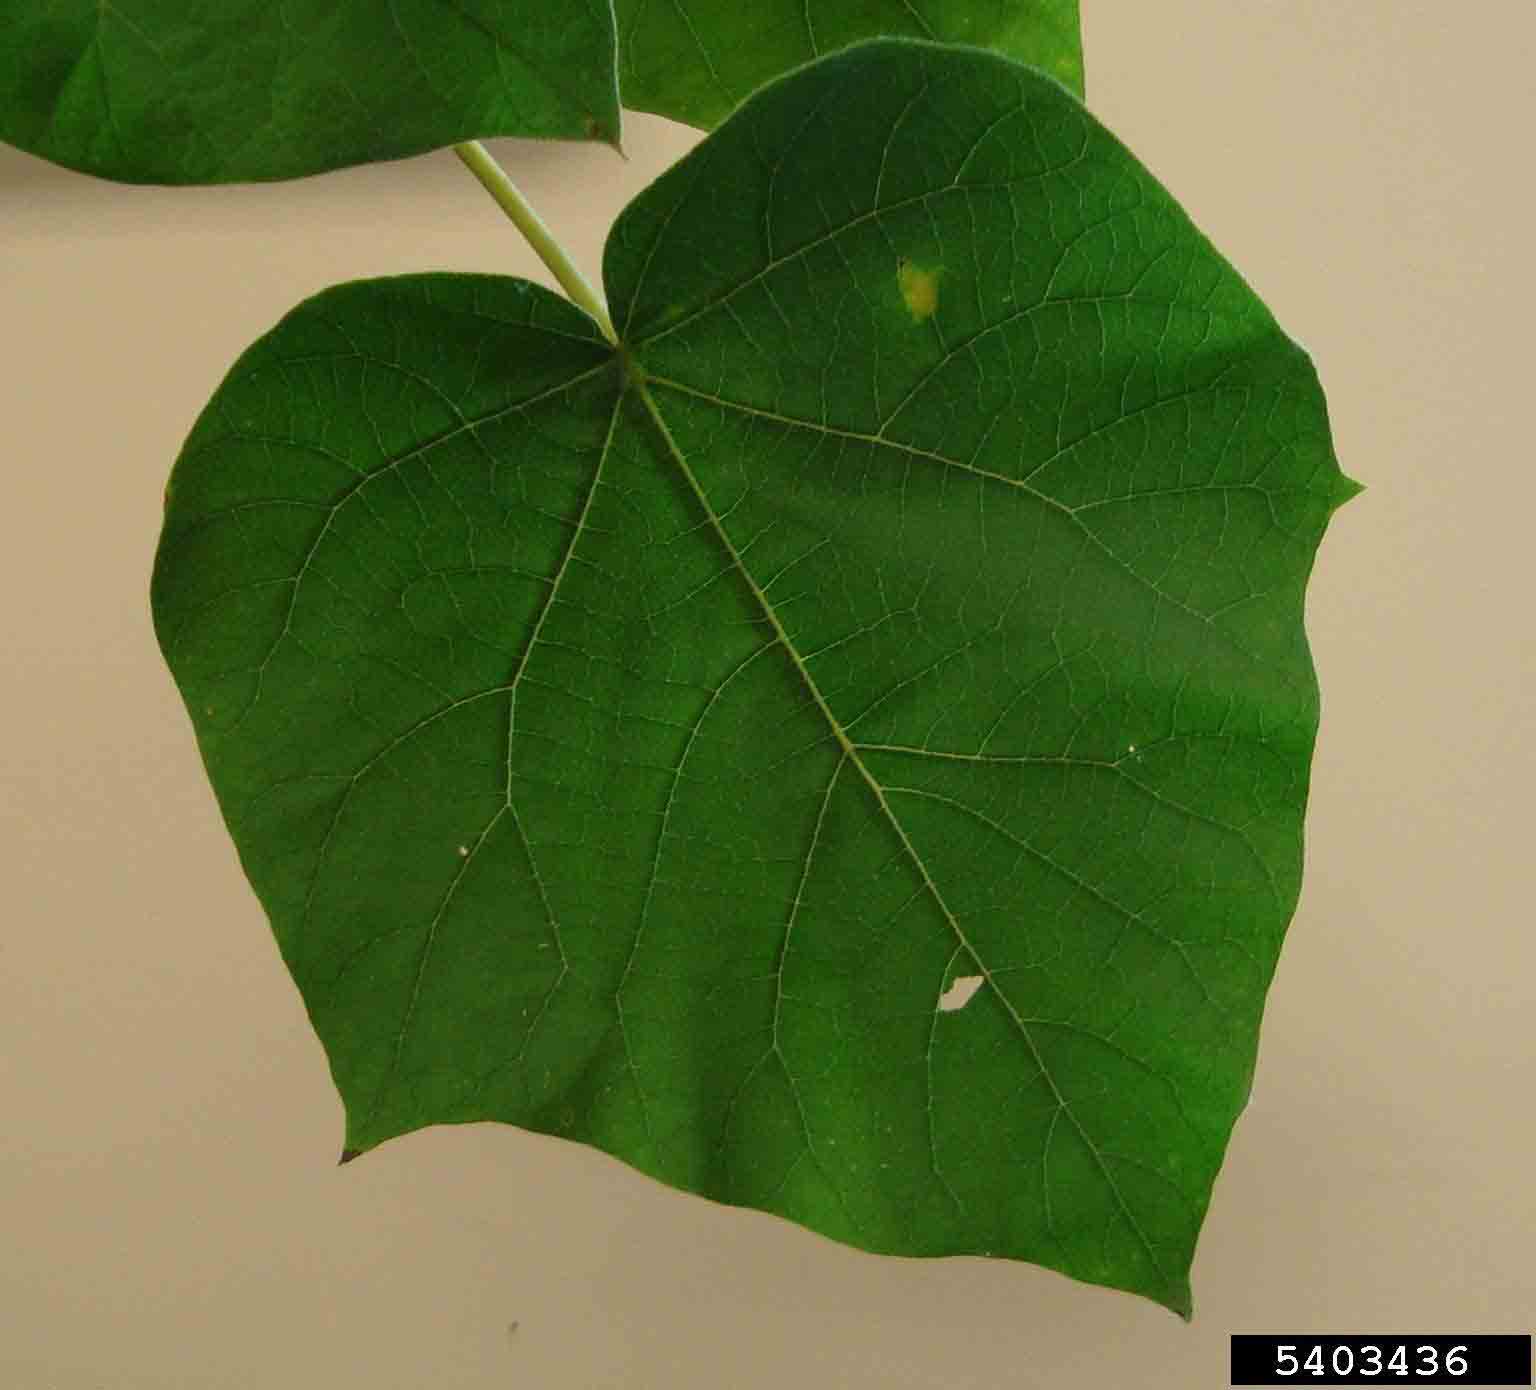 Princess tree leaf, upper side, showing widely spaced teeth and palmate veins